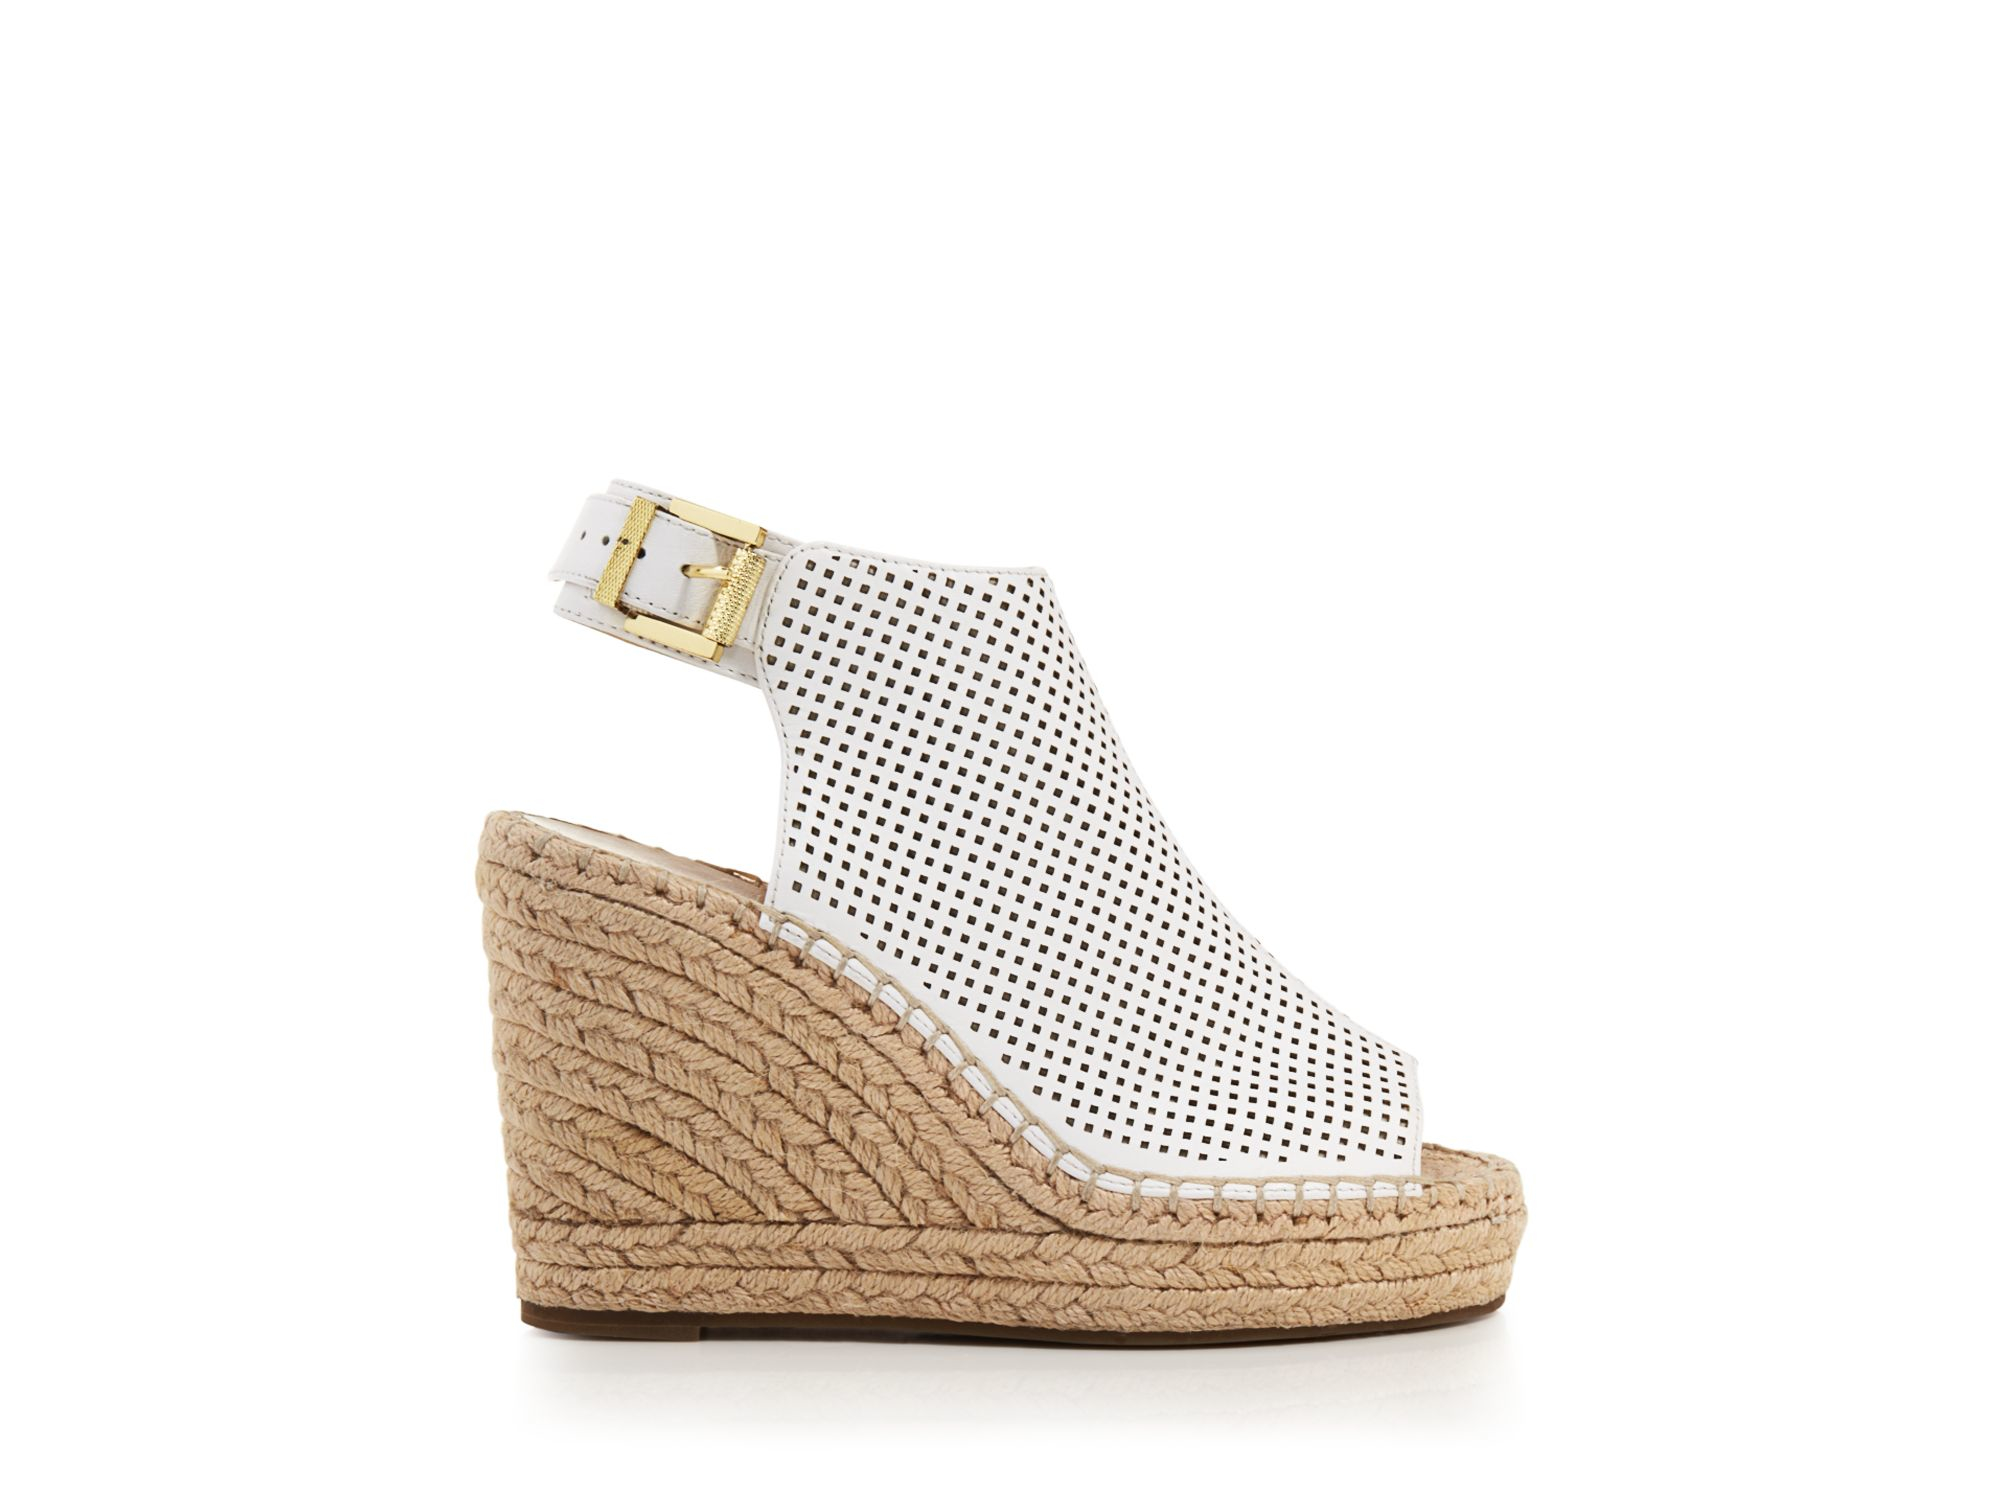 Lyst - Kenneth Cole Platform Wedge Sandals - Olivia in White